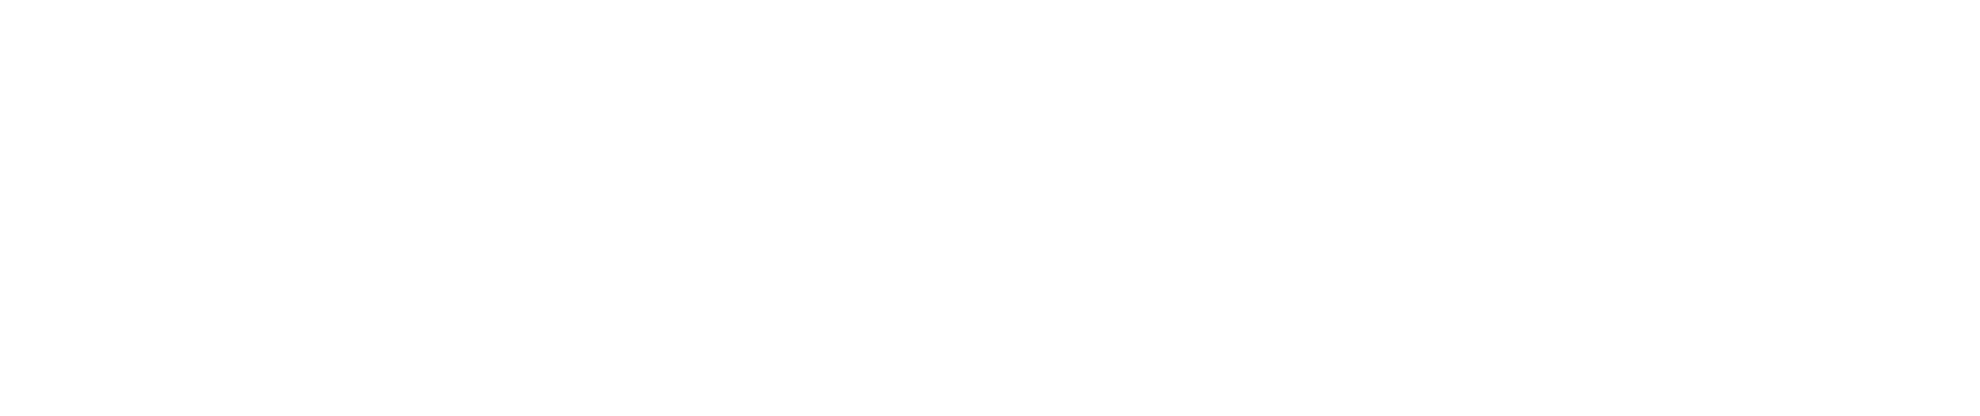 the-cornerstone-group-white-logo